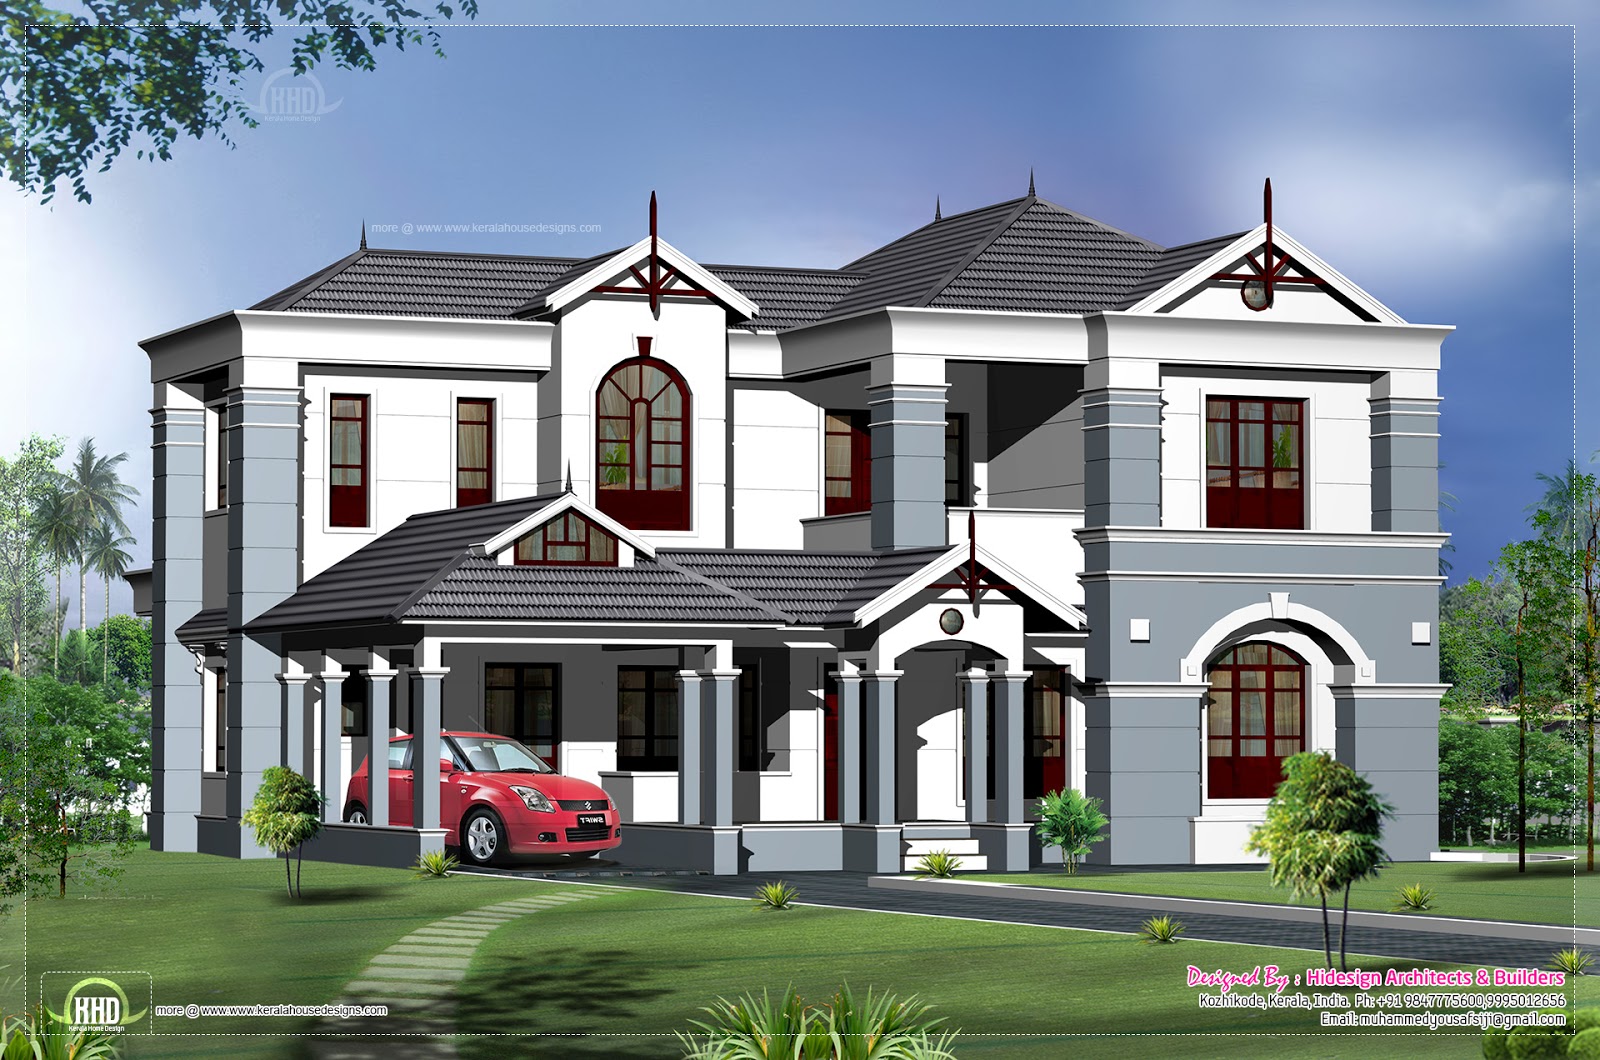  2500  sq  feet  house  elevation  design  Home  Kerala  Plans 